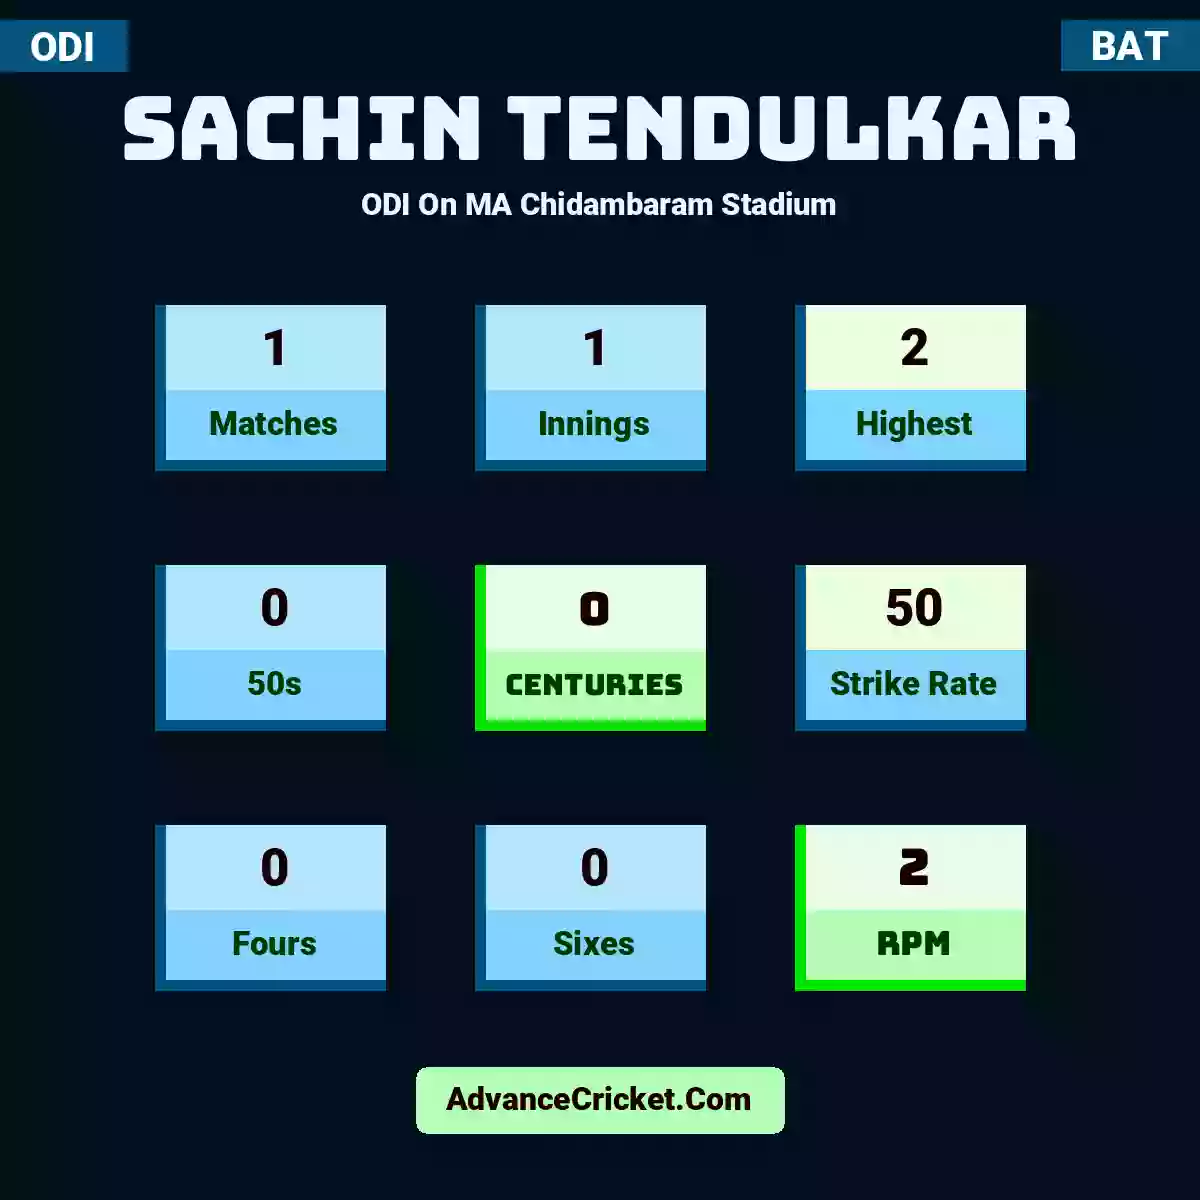 Sachin Tendulkar ODI  On MA Chidambaram Stadium, Sachin Tendulkar played 1 matches, scored 2 runs as highest, 0 half-centuries, and 0 centuries, with a strike rate of 50. S.Tendulkar hit 0 fours and 0 sixes, with an RPM of 2.